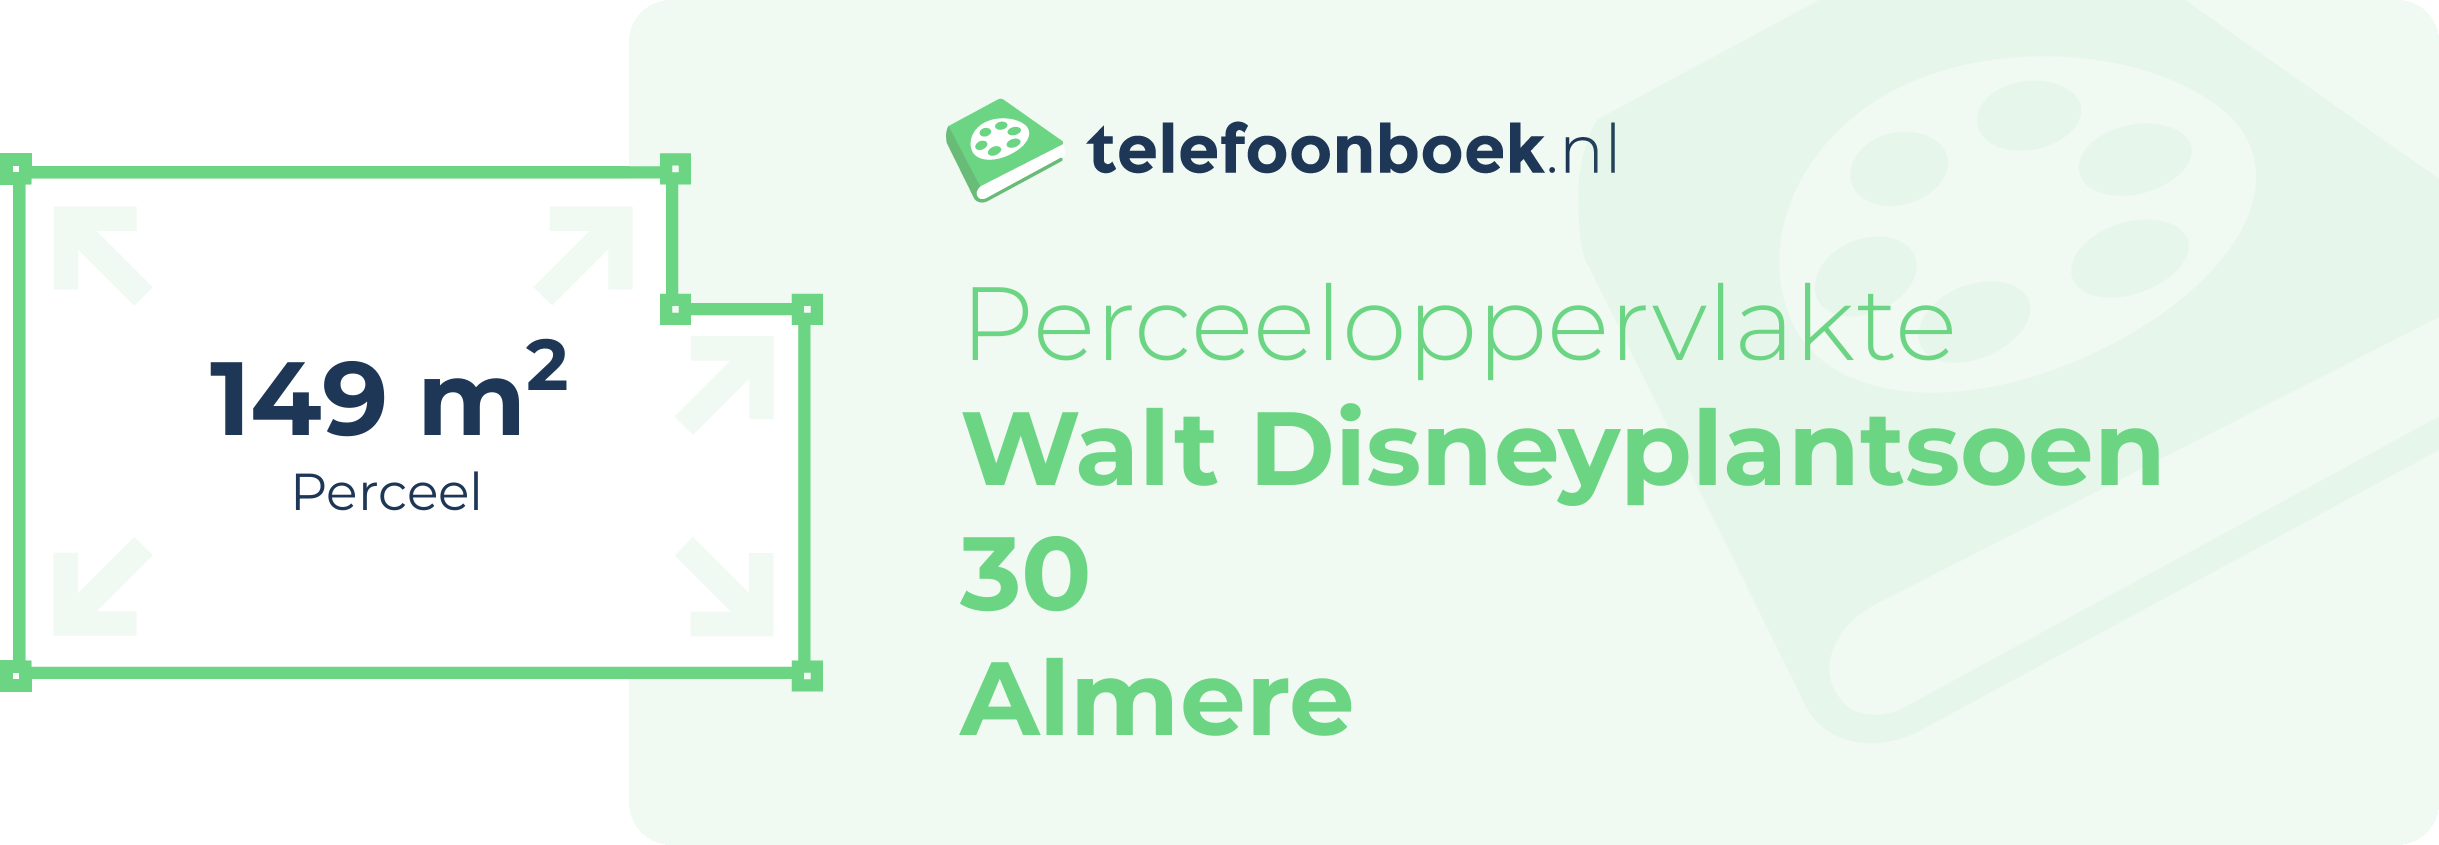 Perceeloppervlakte Walt Disneyplantsoen 30 Almere